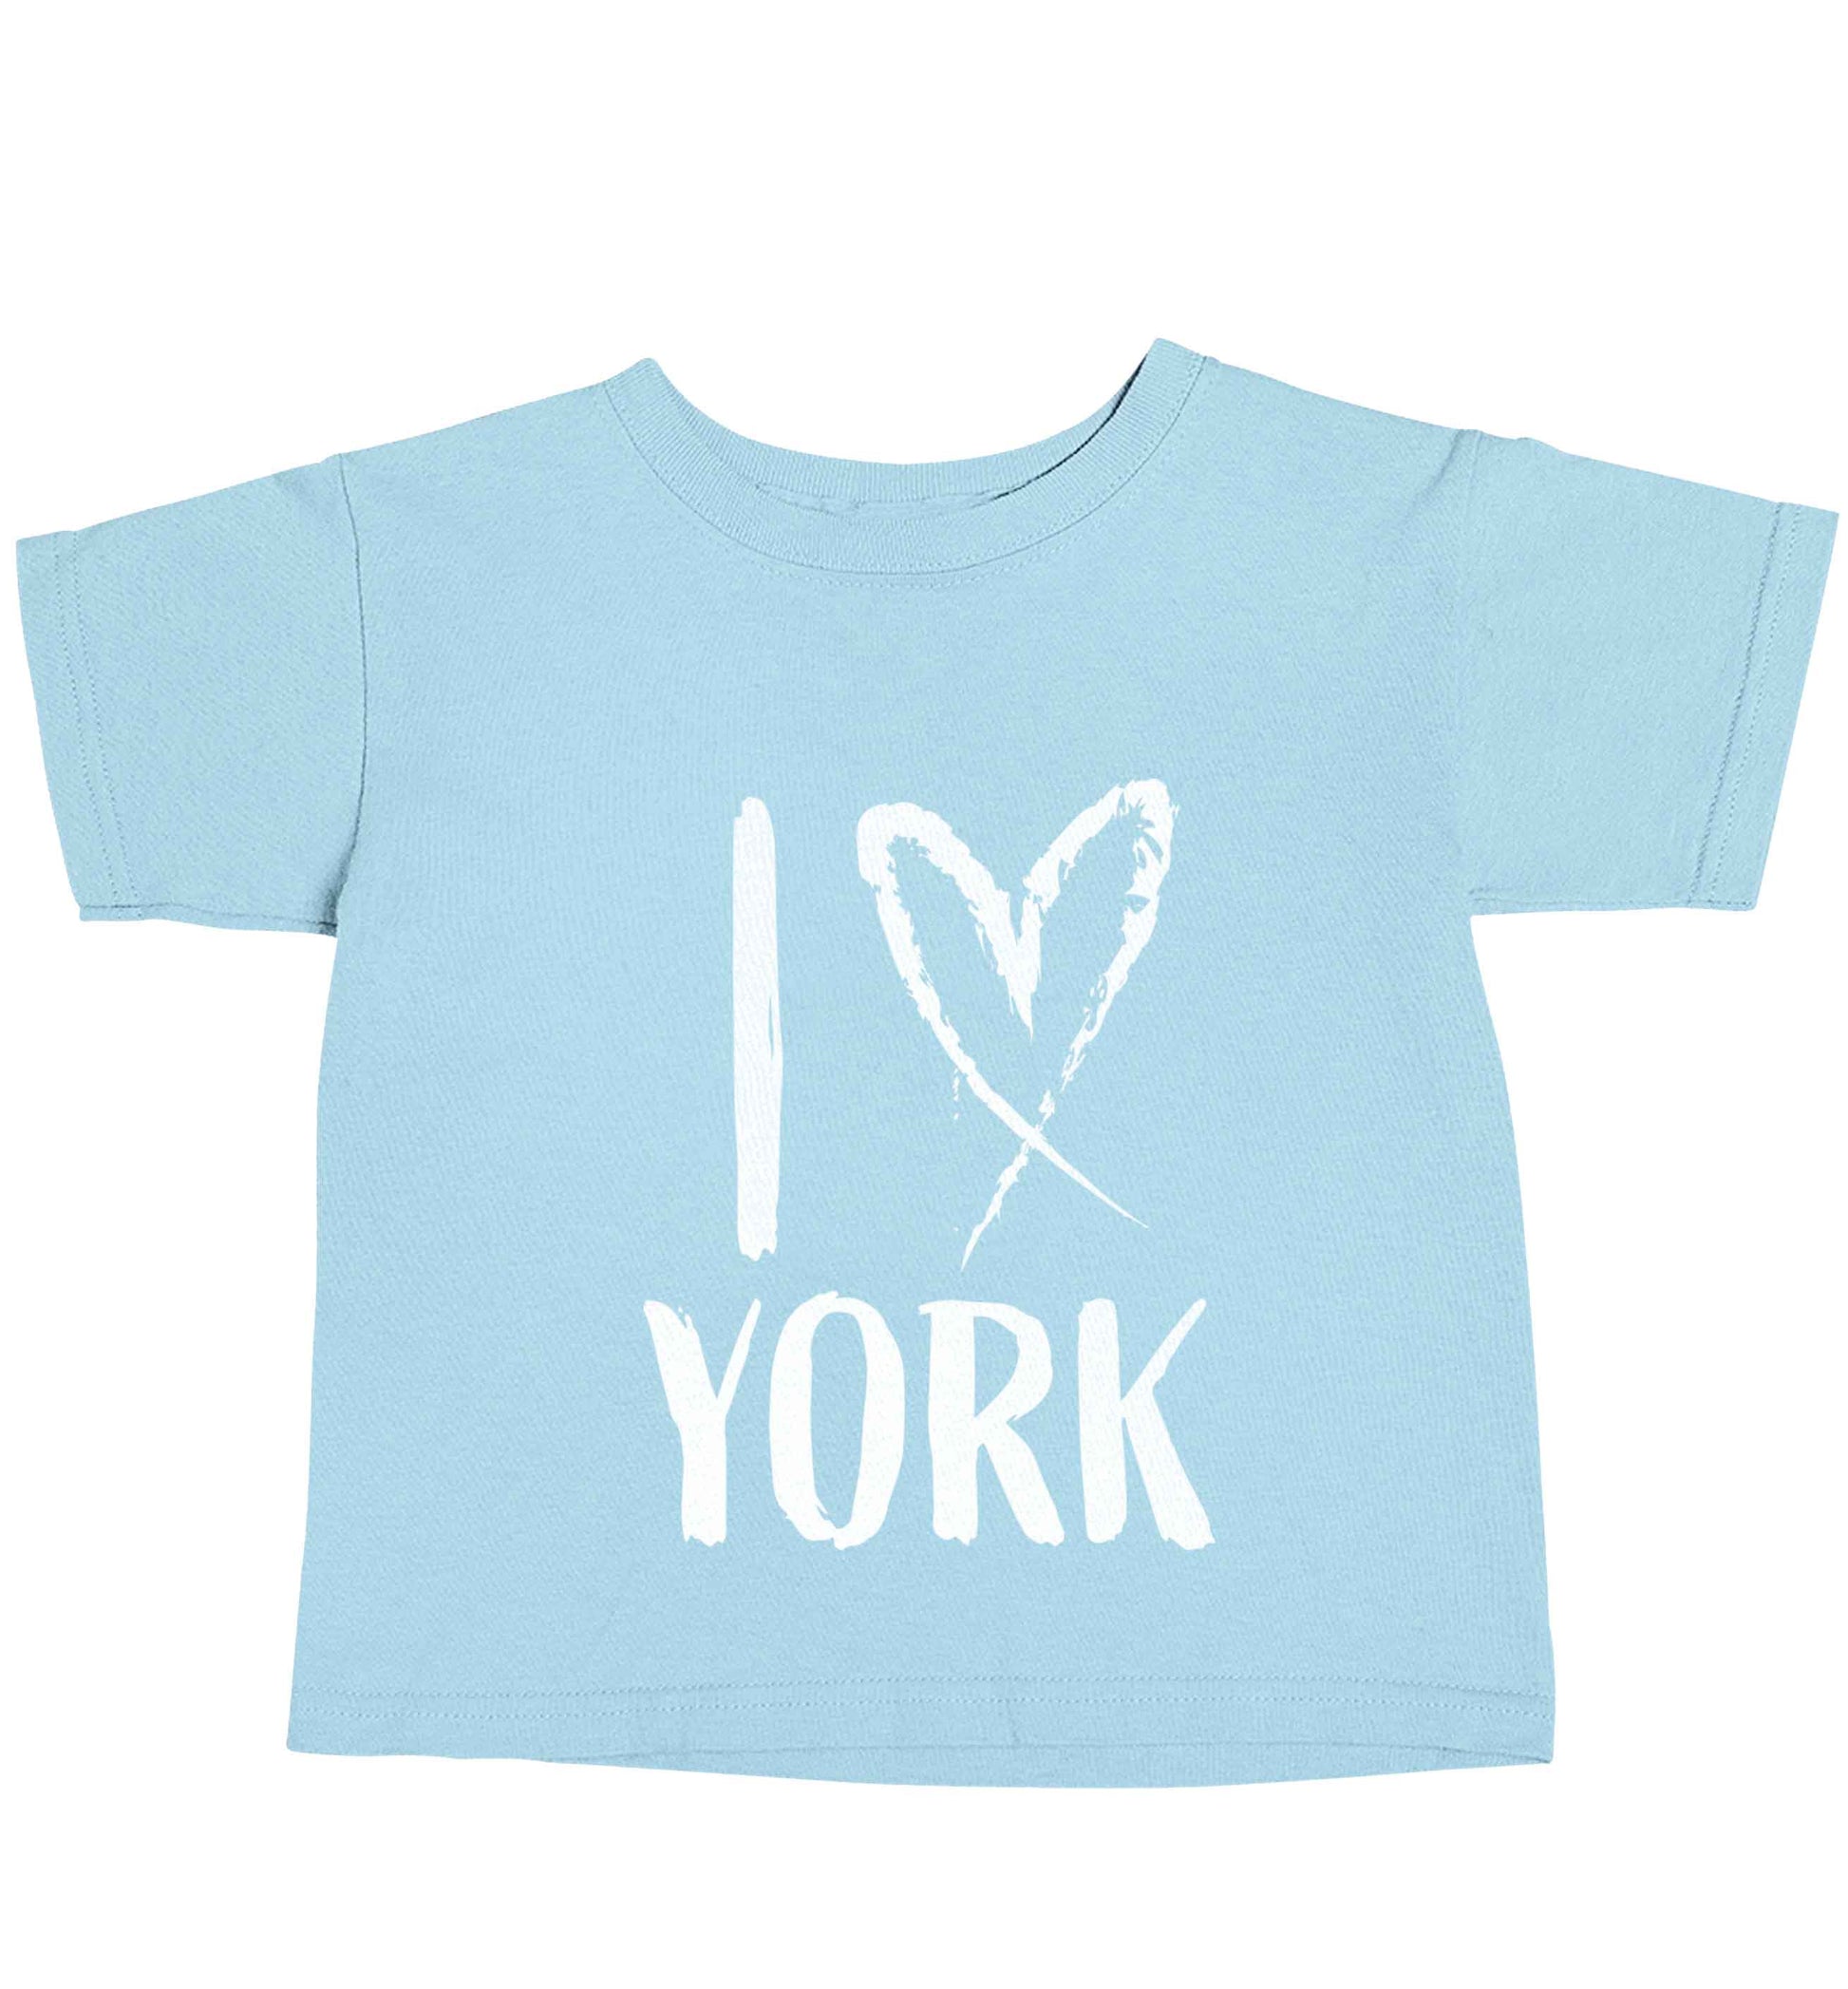 I love York light blue baby toddler Tshirt 2 Years